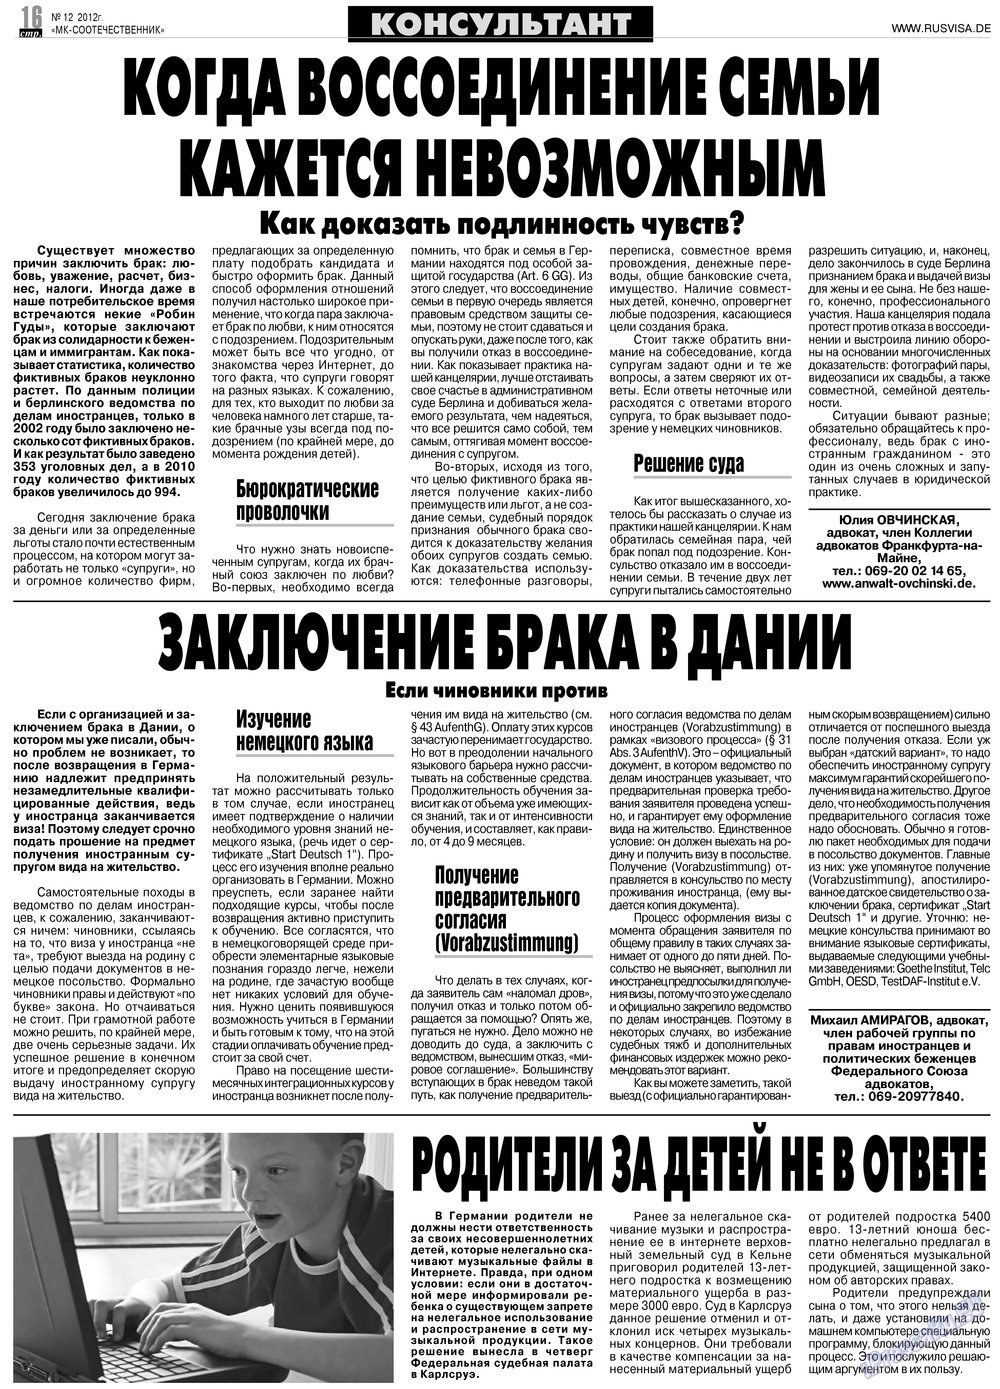 МК-Германия планета мнений, газета. 2012 №12 стр.16